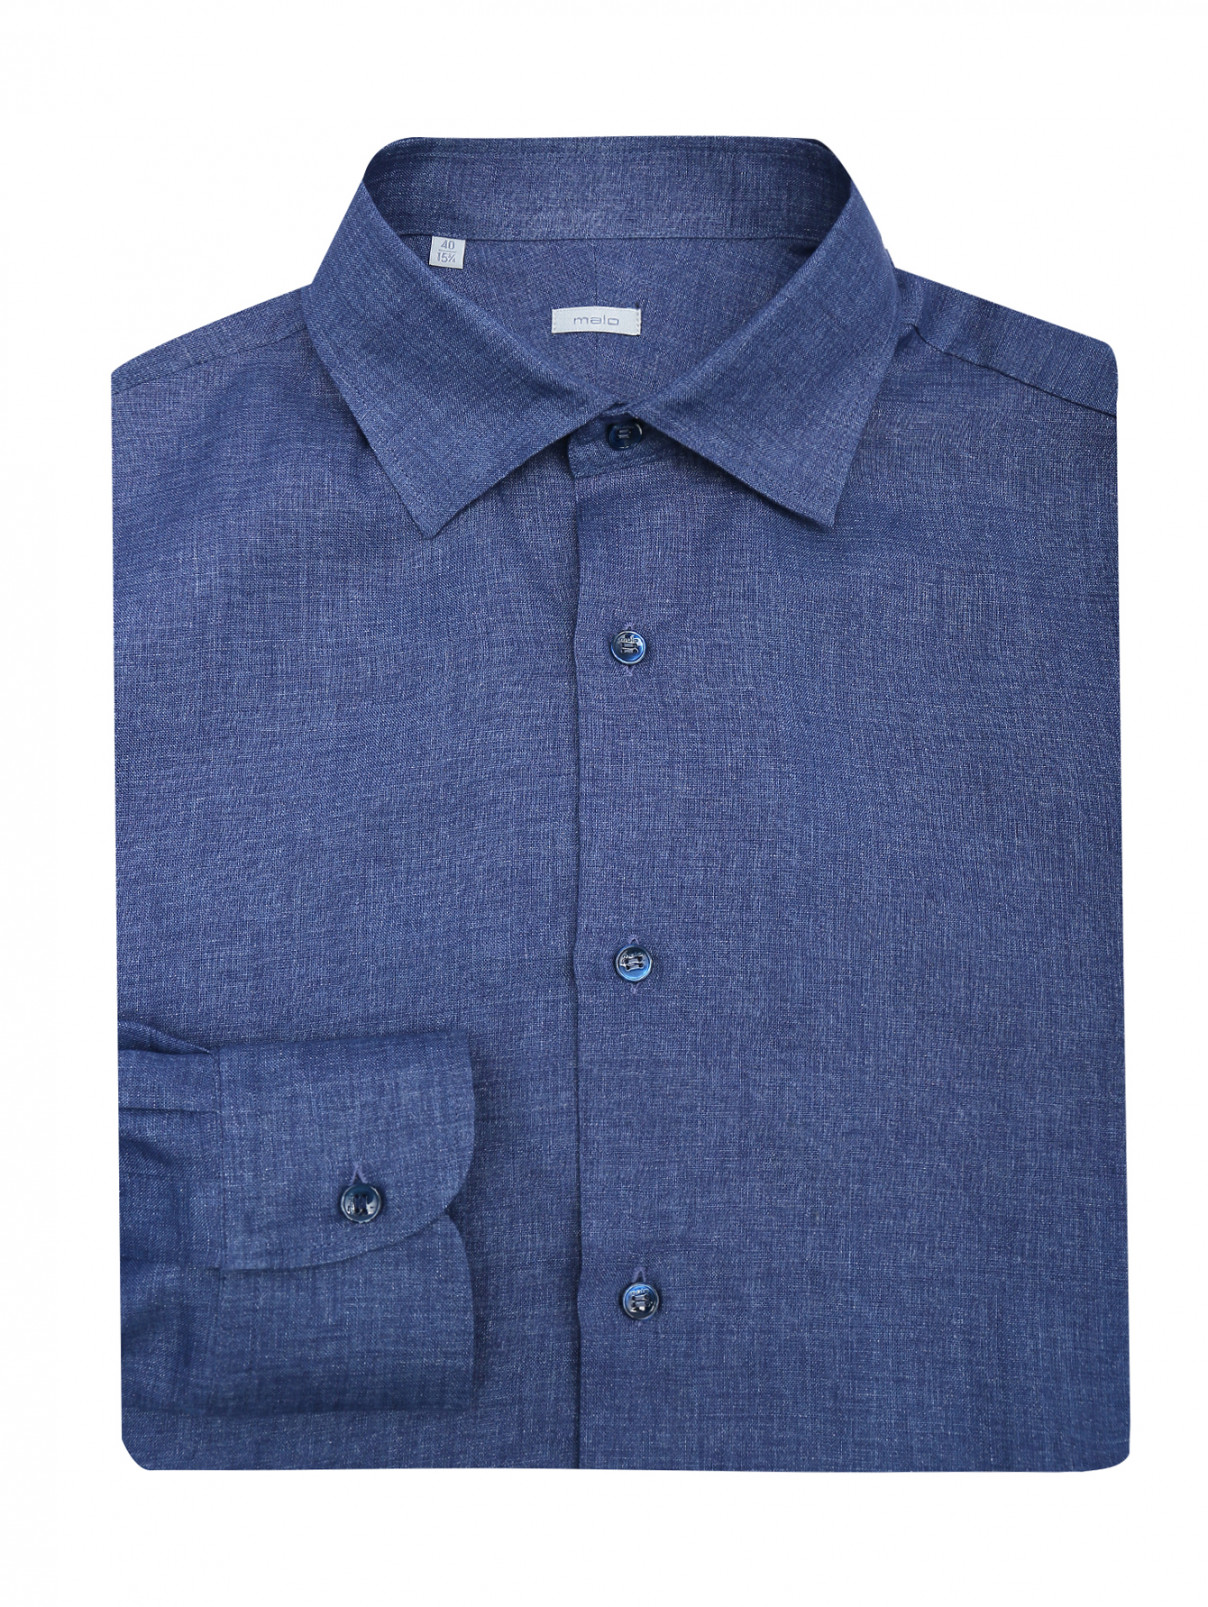 Рубашка изо льна однотонная Malo  –  Общий вид  – Цвет:  Синий